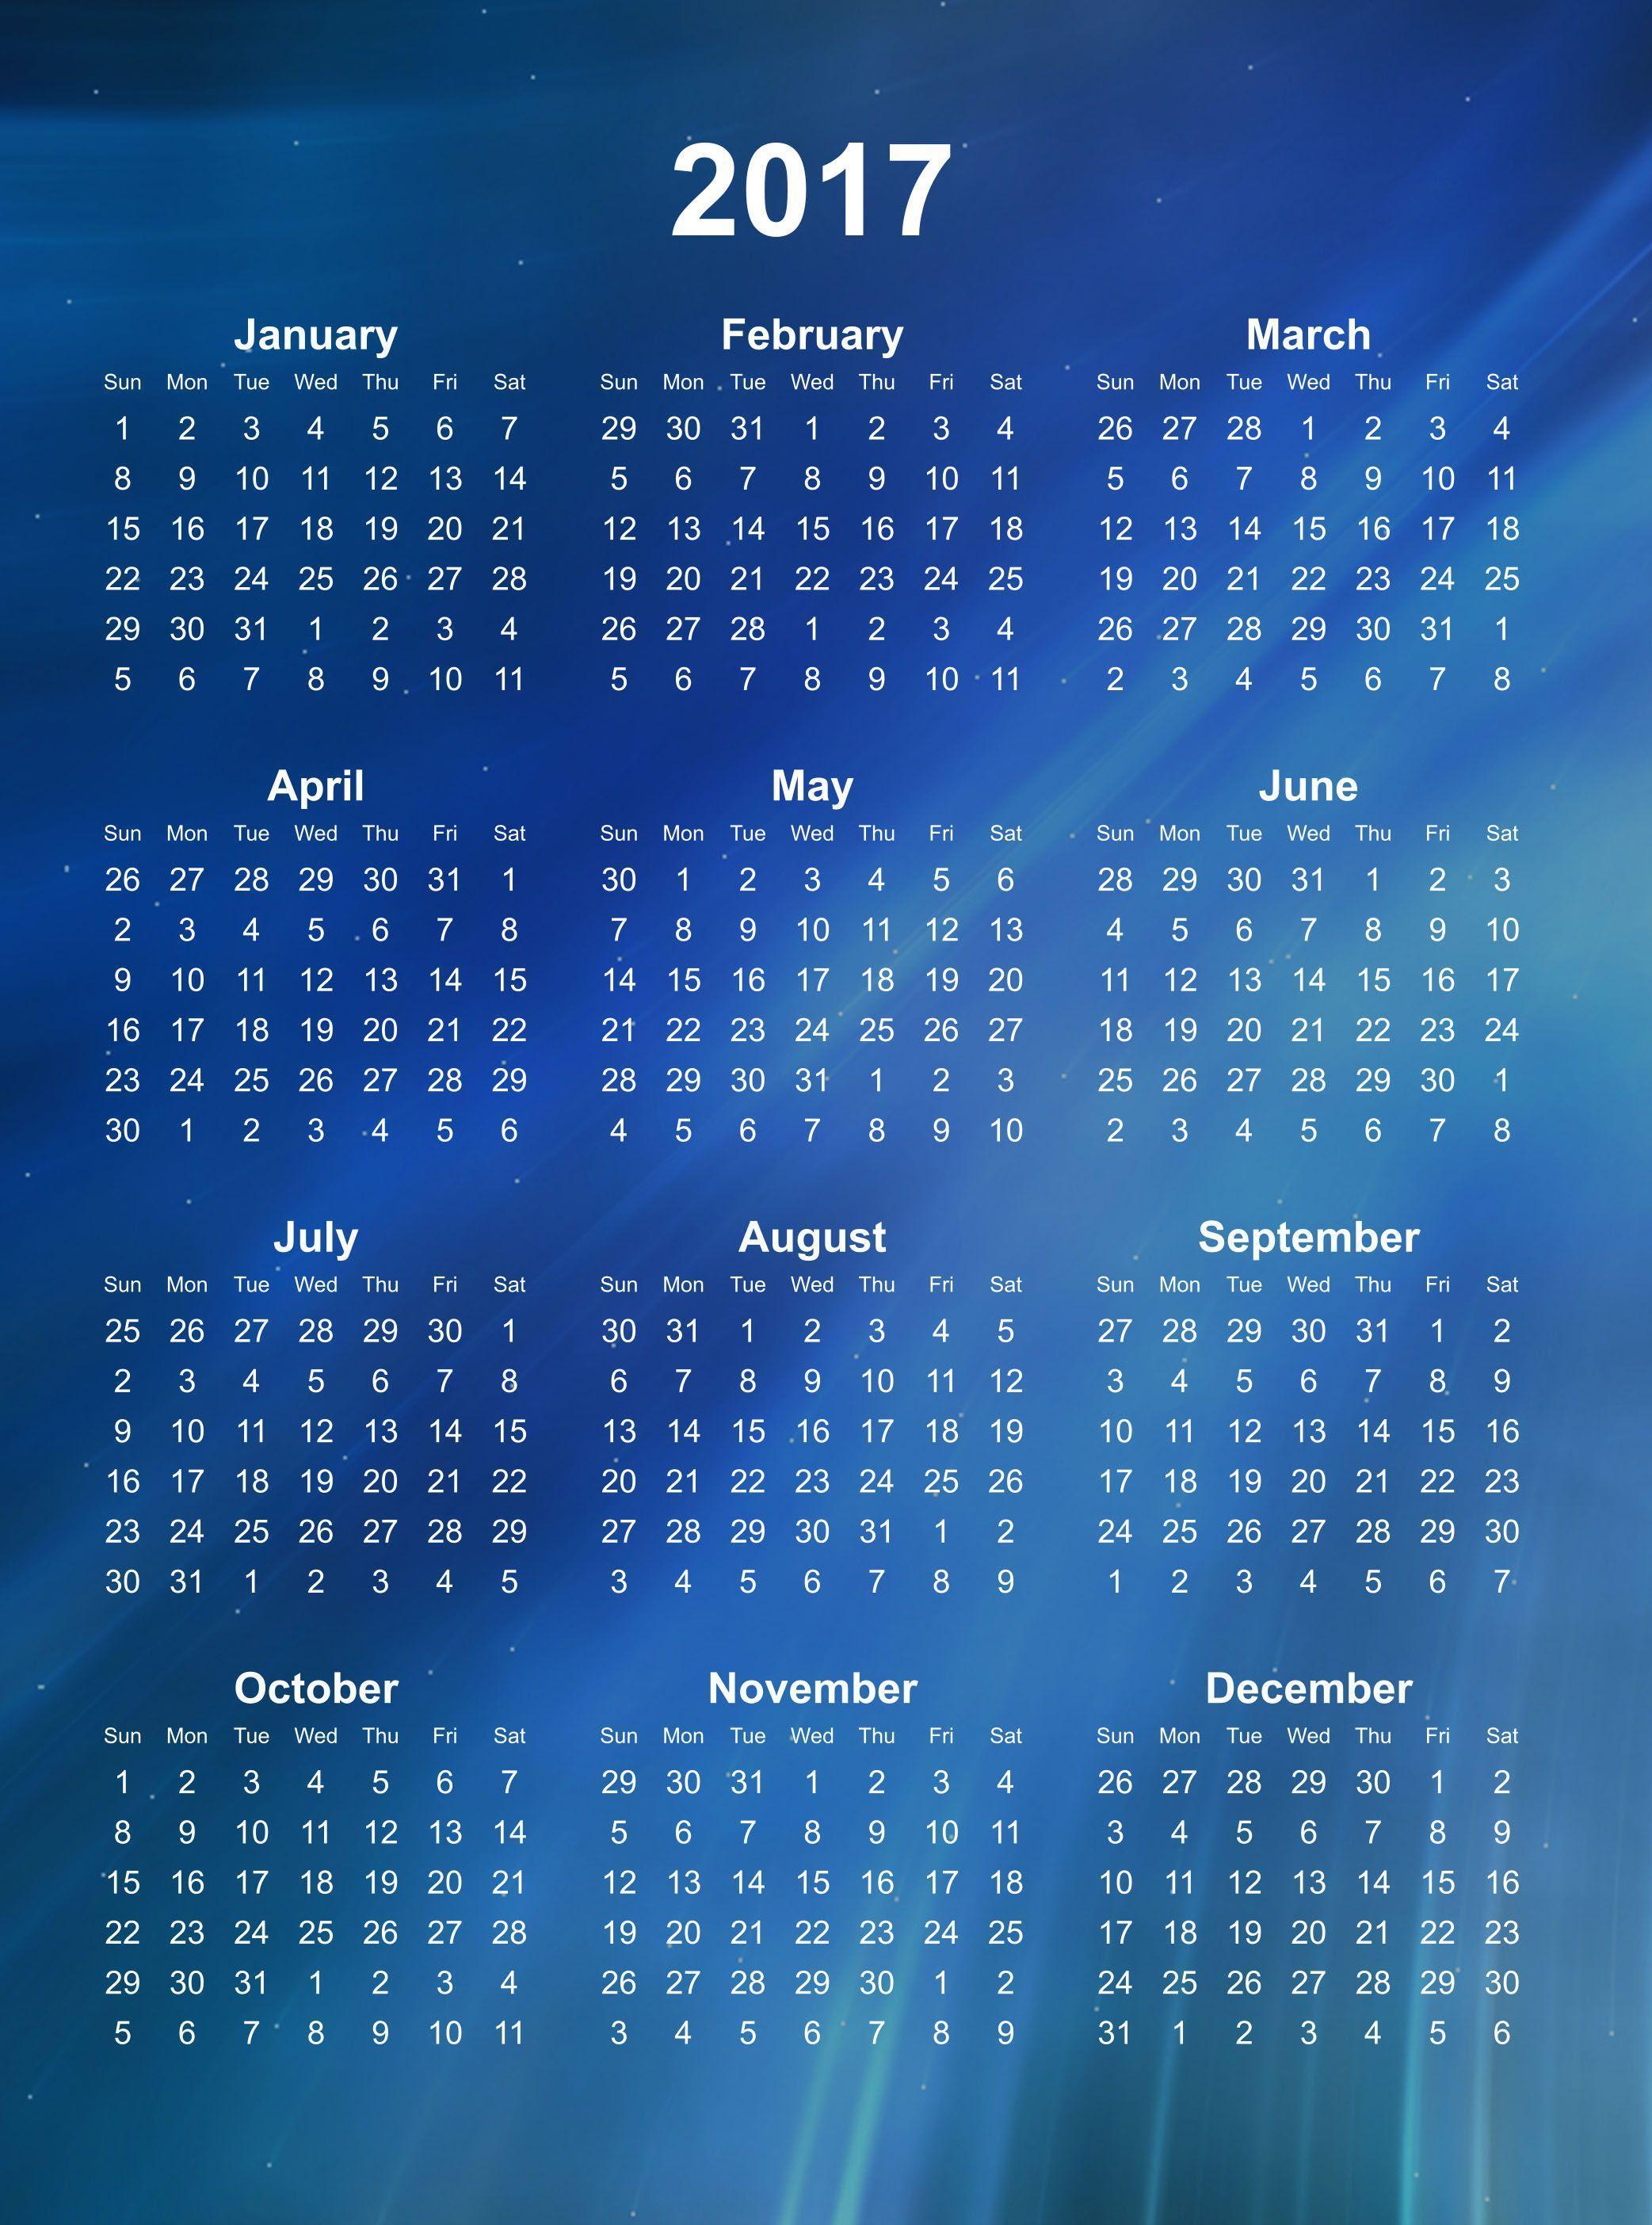 Calendar 2017 Wallpapers High Quality